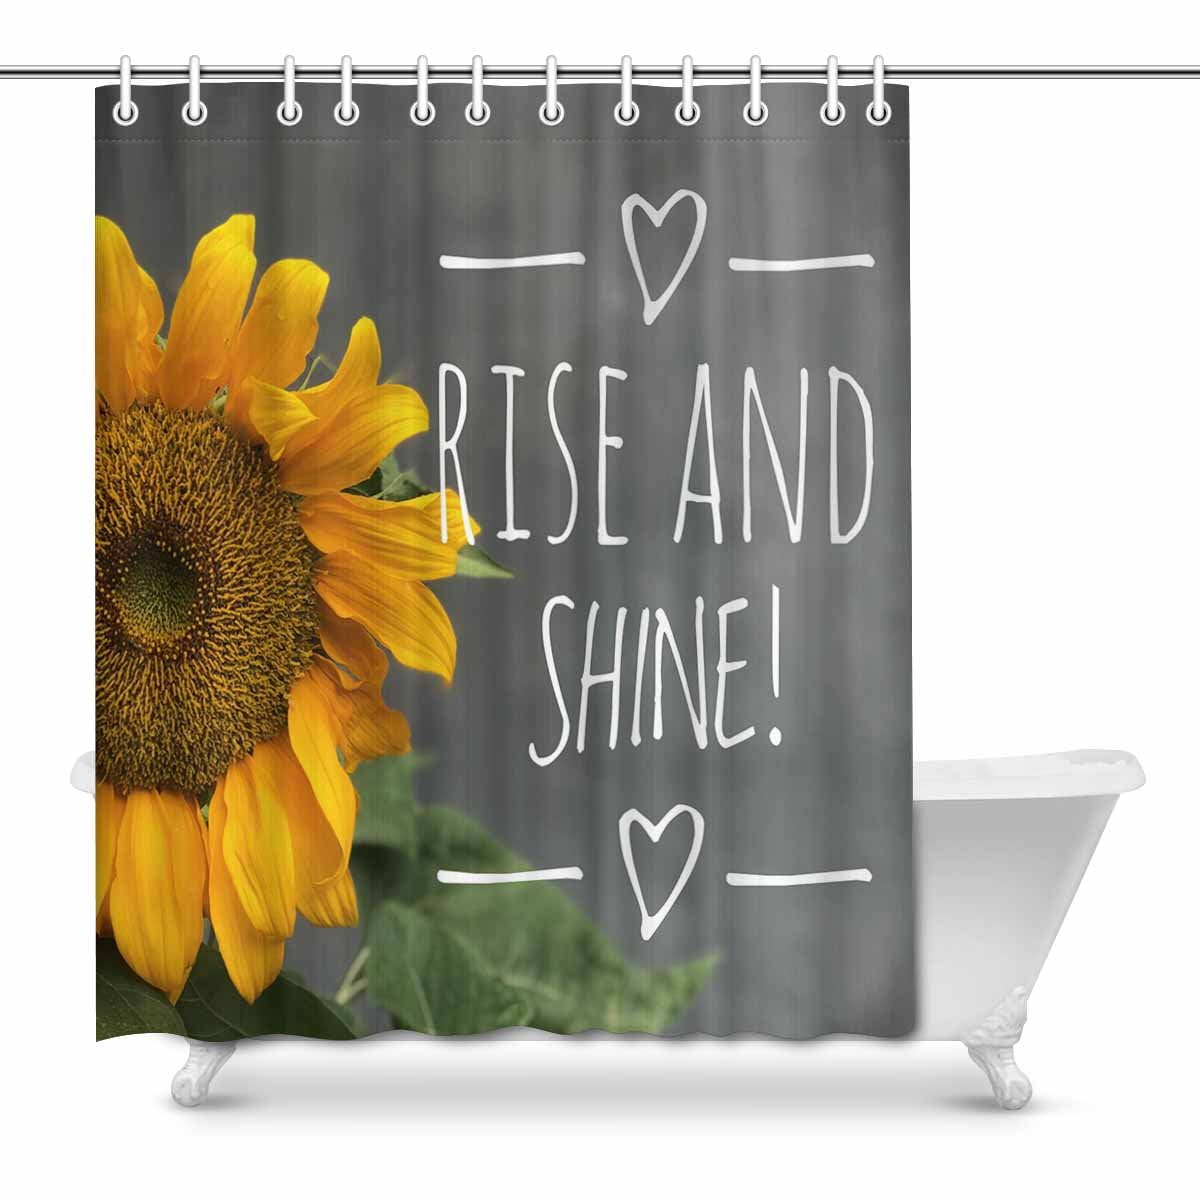 Details about   Sunflowers Inspirational Words Cartoon Style Shower Curtain Set Bathroom Decor 